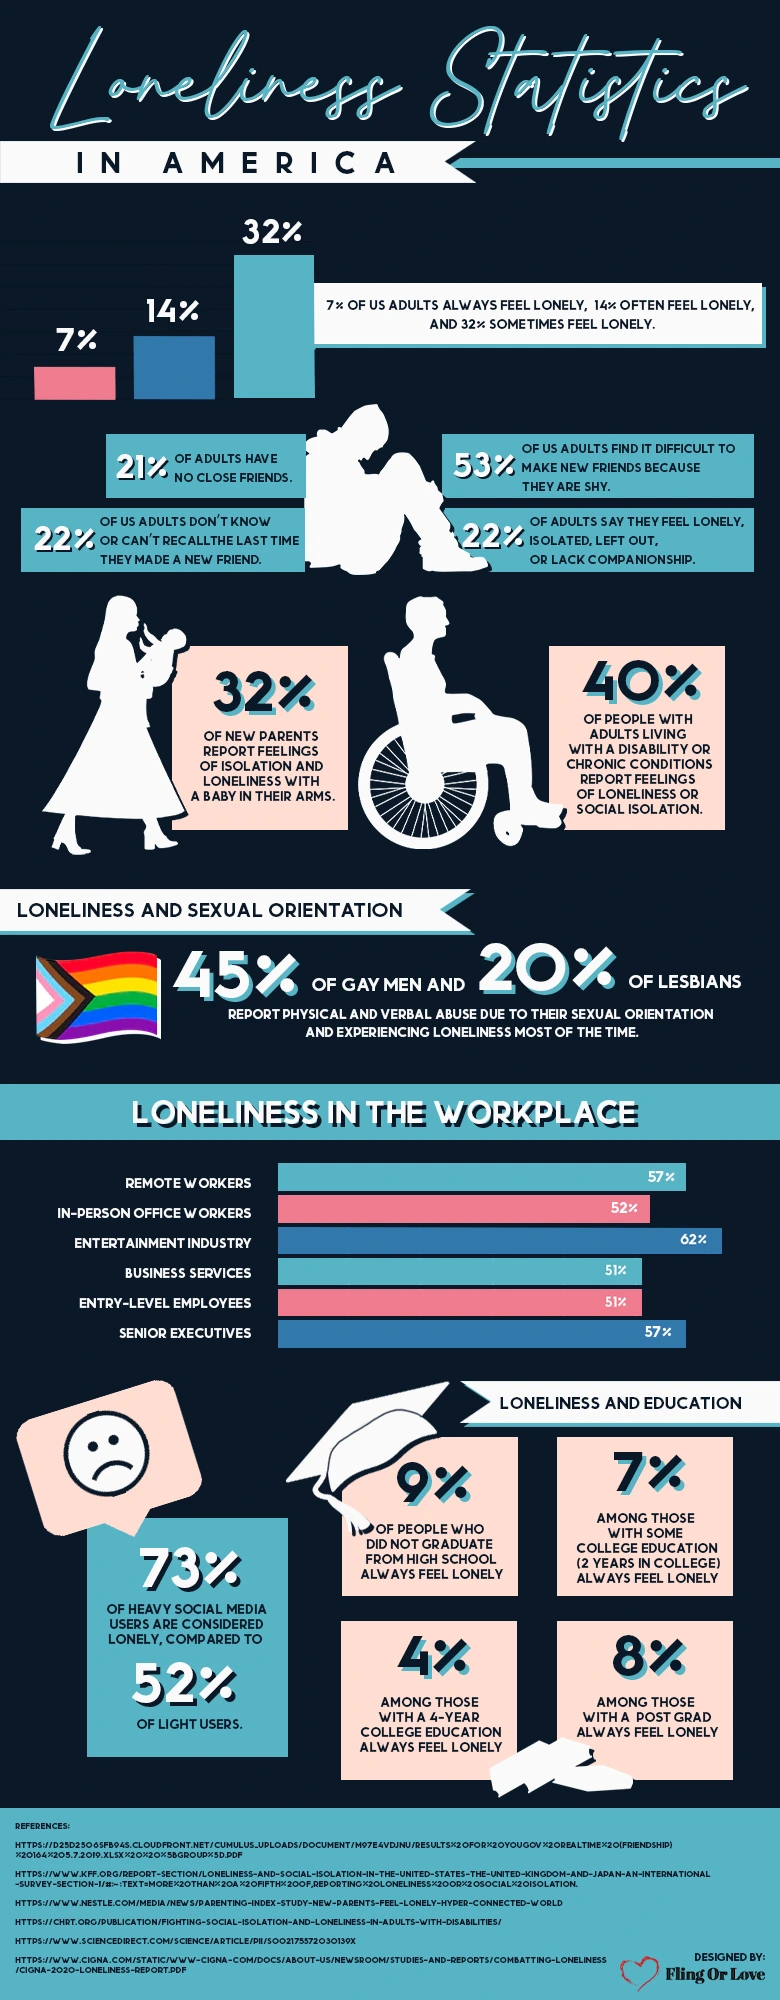 Loneliness Statistics